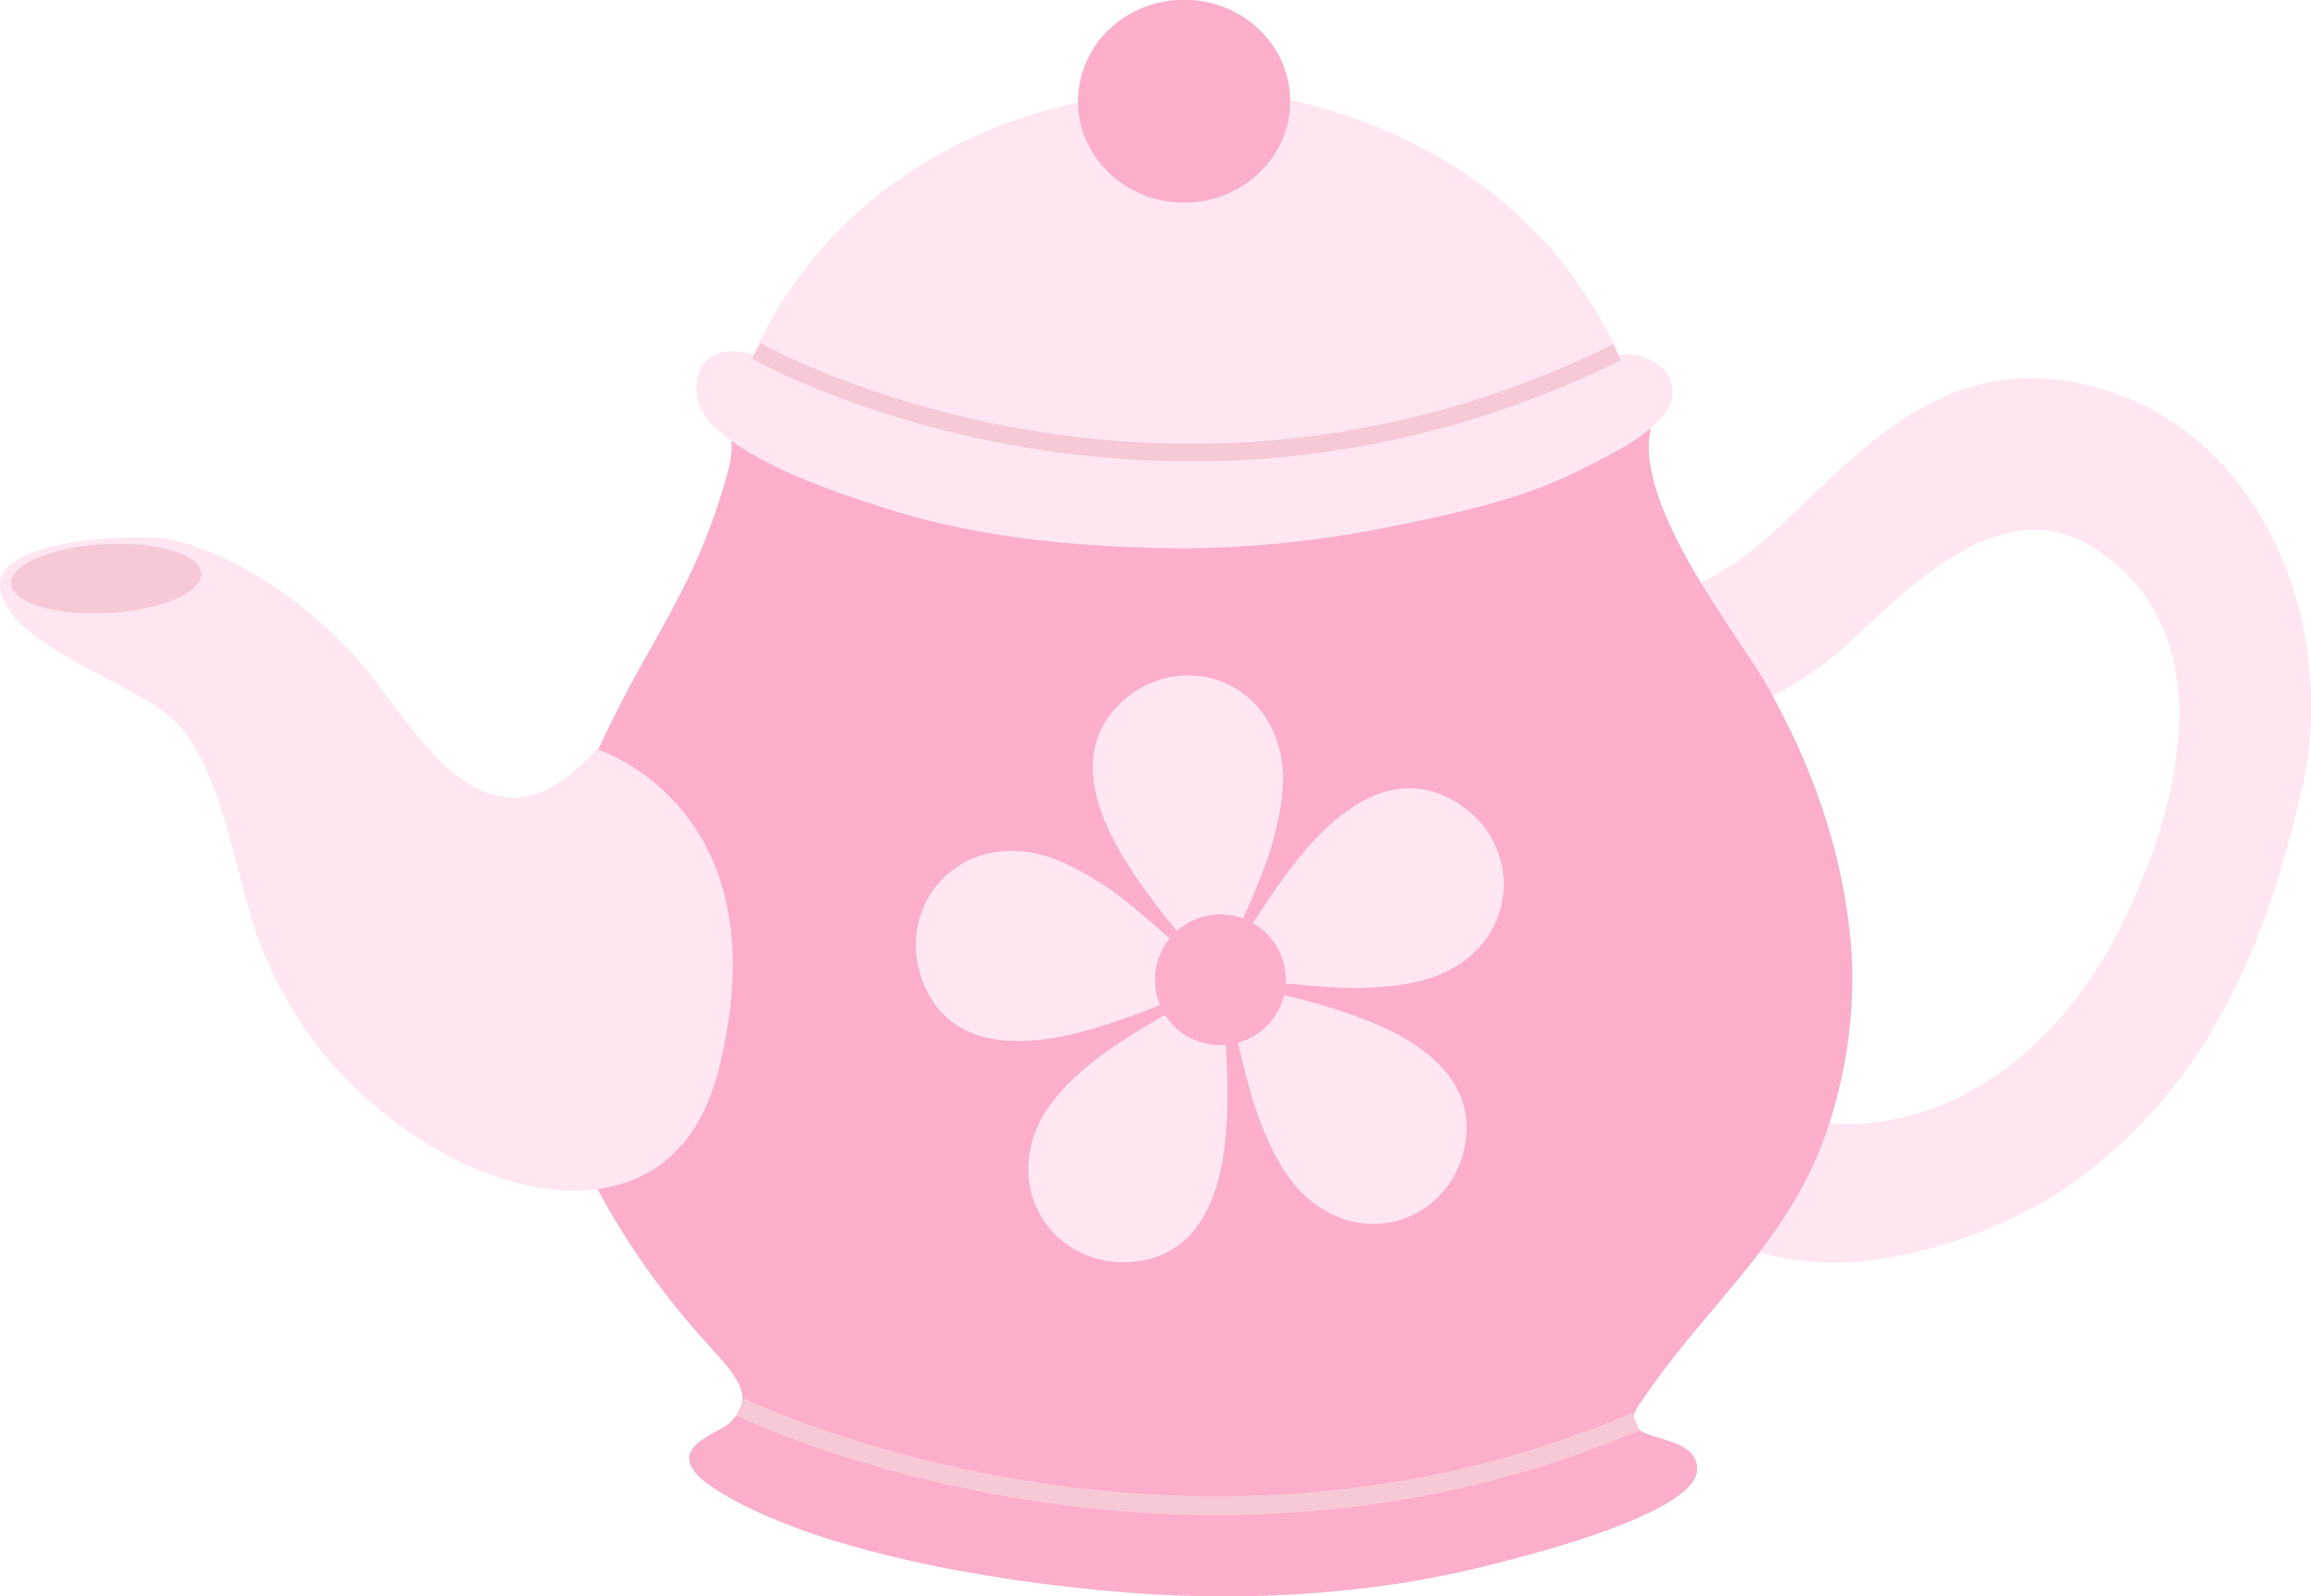 Daisy clipart cute. Teapot heart free on